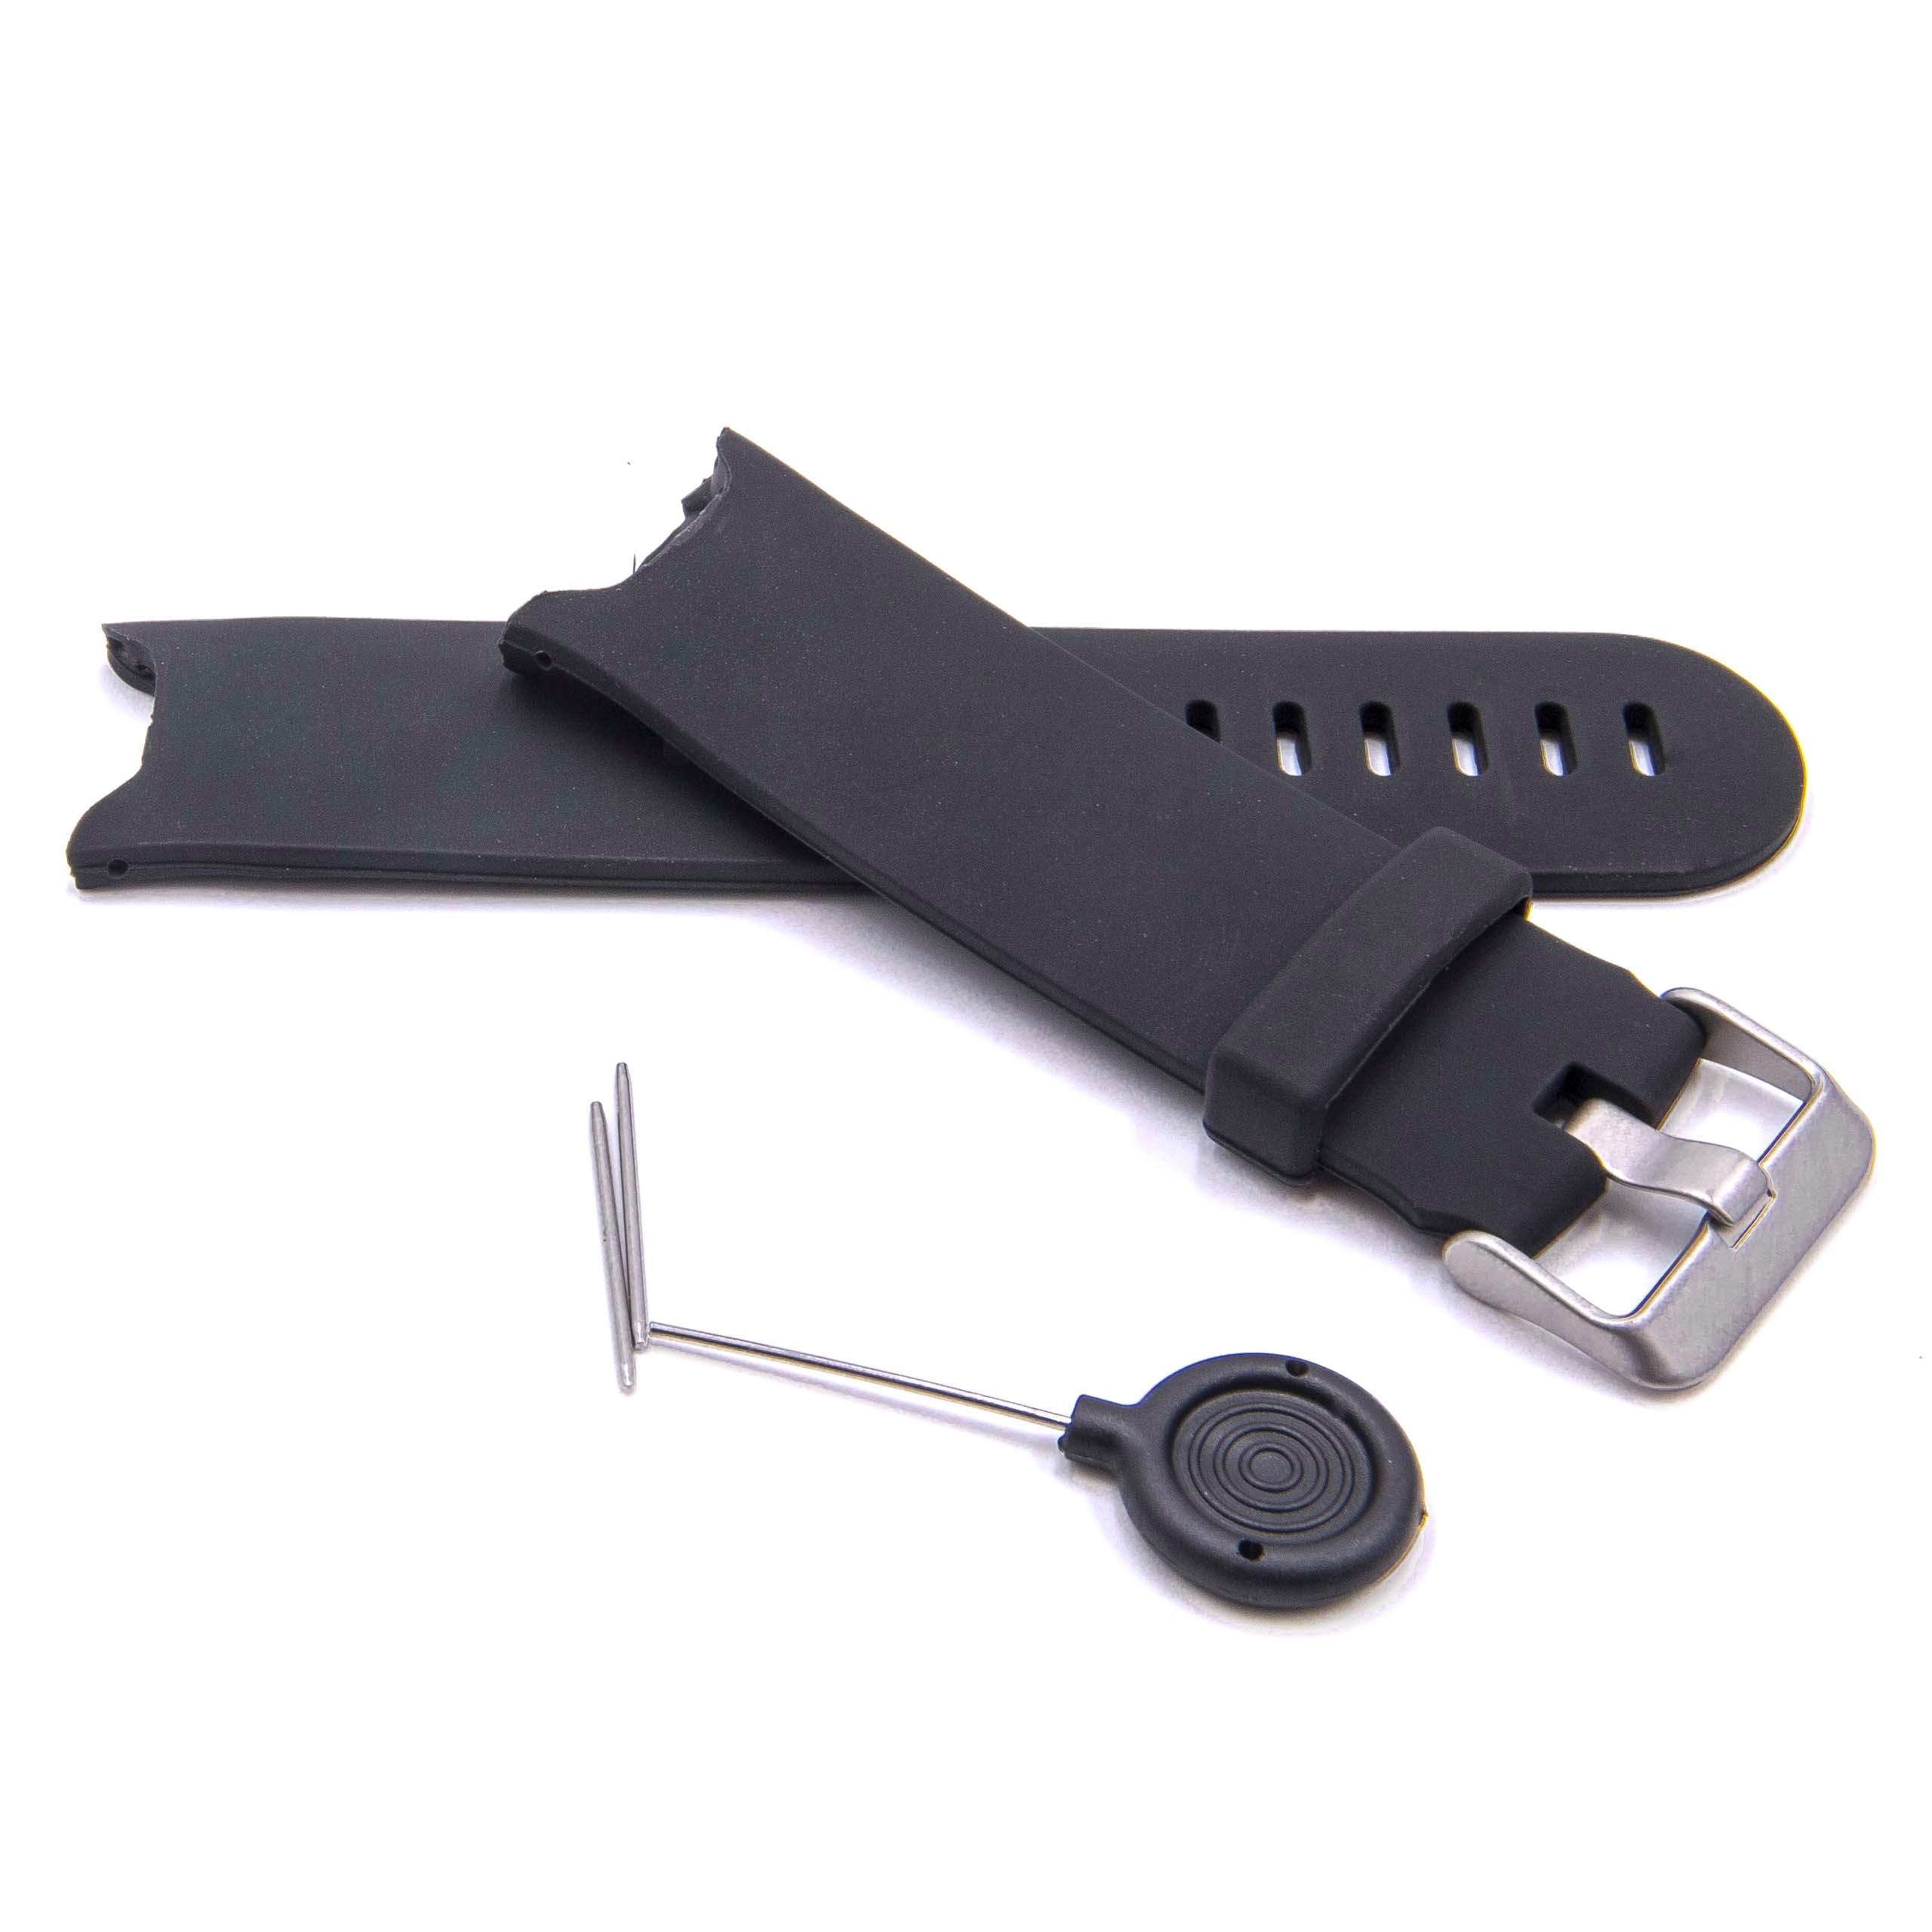 Armband für Garmin Approach Smartwatch - 11,7cm + 9,2 cm lang, 24mm breit, Silikon, schwarz